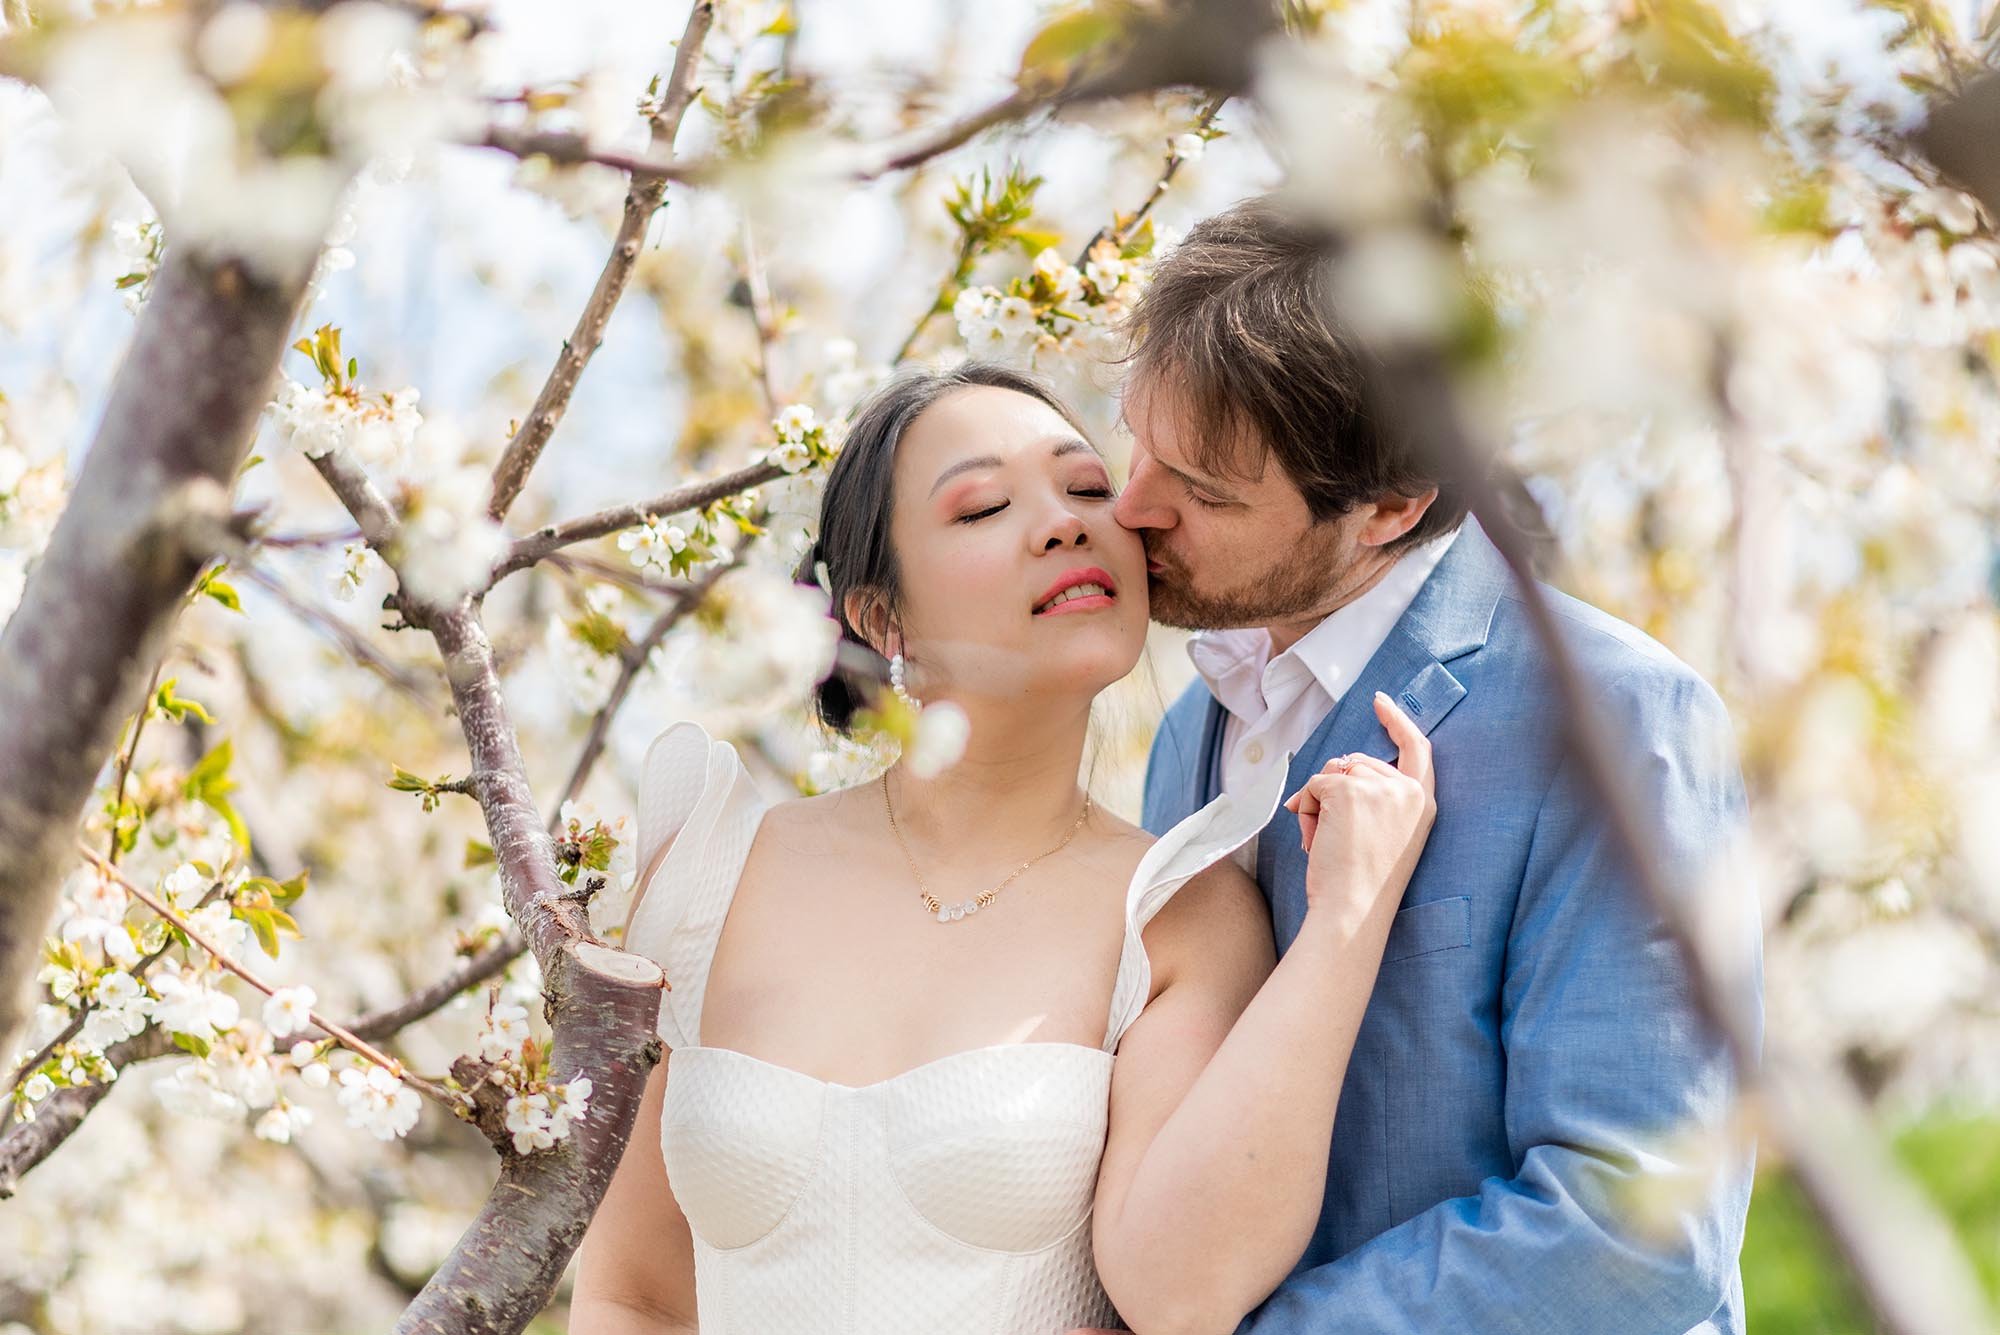 Alena-Leena-Mimosa-Wedding-Dress-Cherry-Blossom-12.jpg